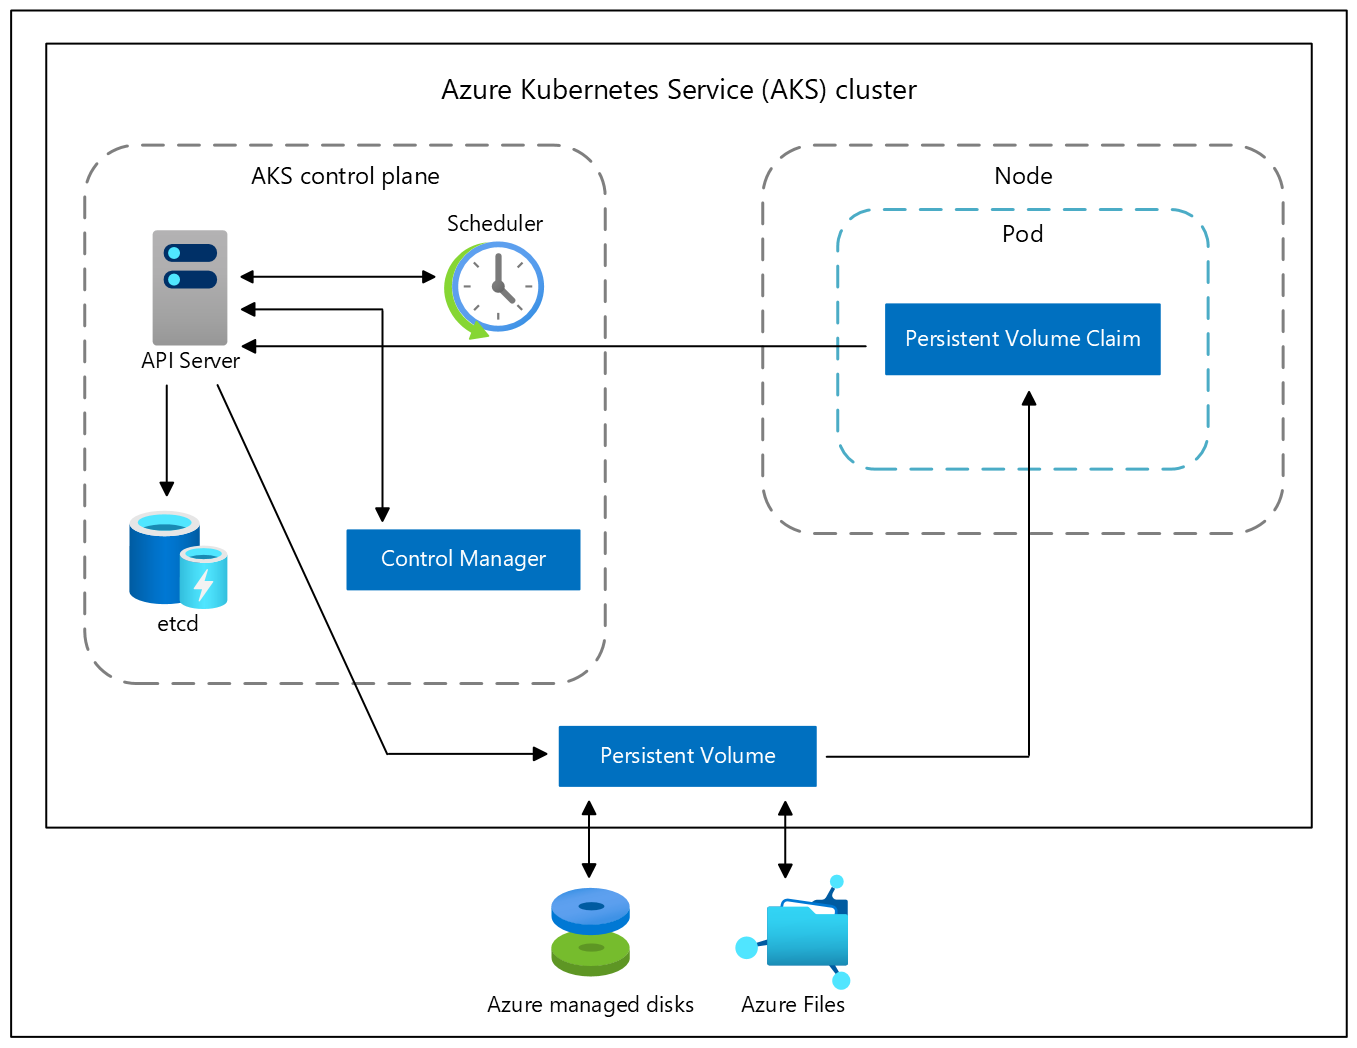 Схема вариантов хранения приложений в кластере Служба Azure Kubernetes (AKS).